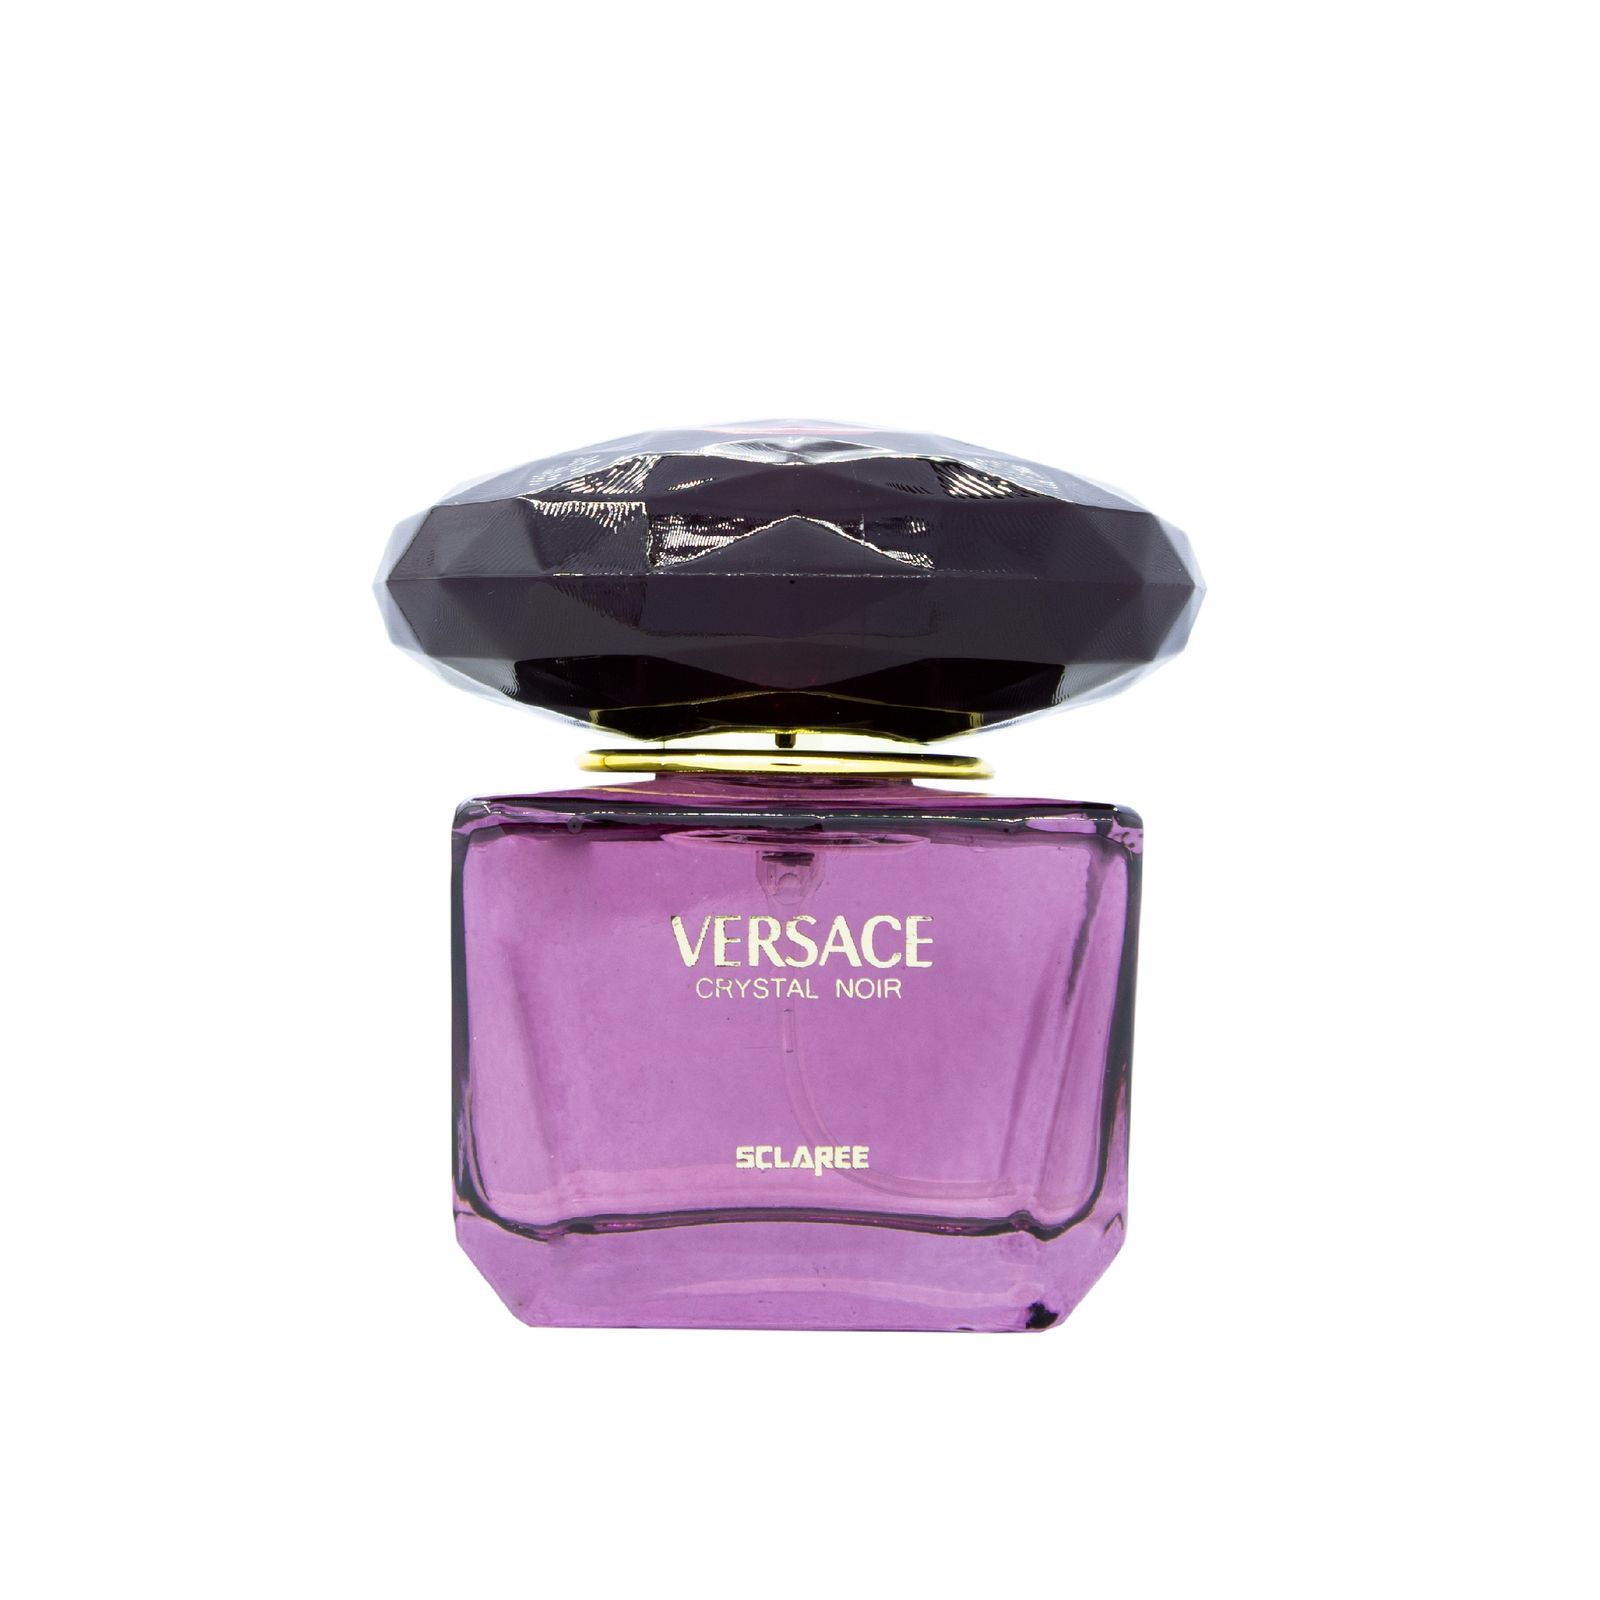 عطر جیبی زنانه اسکلاره مدل Versace Crystal Noir حجم 30 میلی لیتر -  - 1